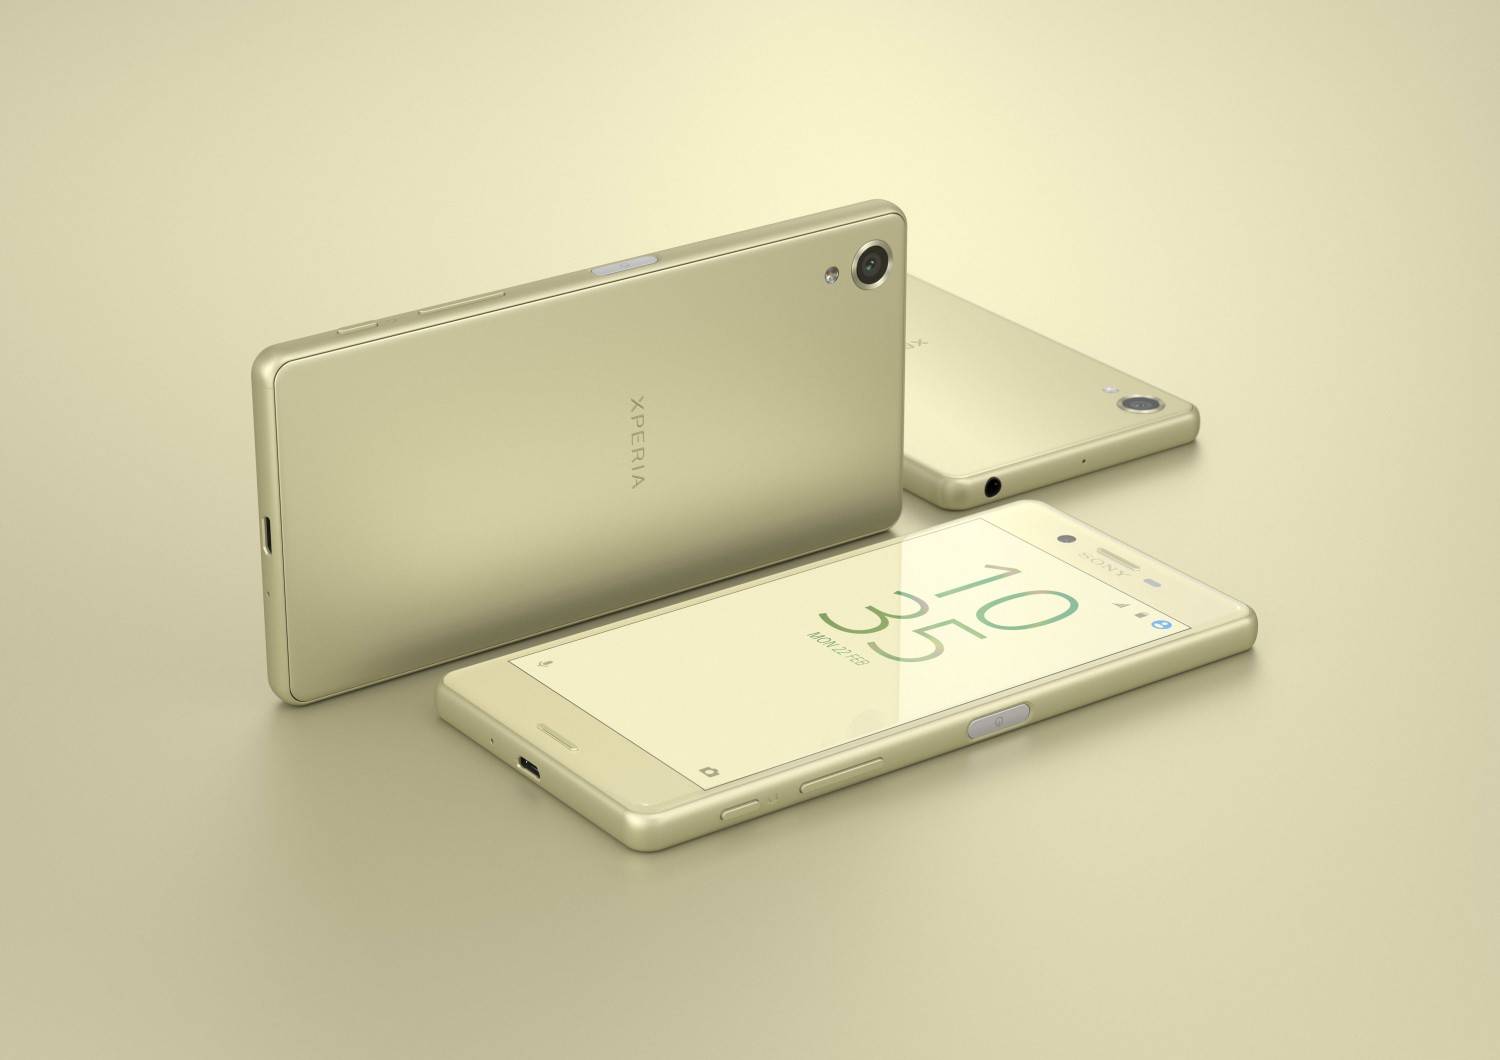 mobile Devices Seit heute: Sony verkauft neues Smartphone Xperia X mit 23-Megapixel-Kamera - News, Bild 1